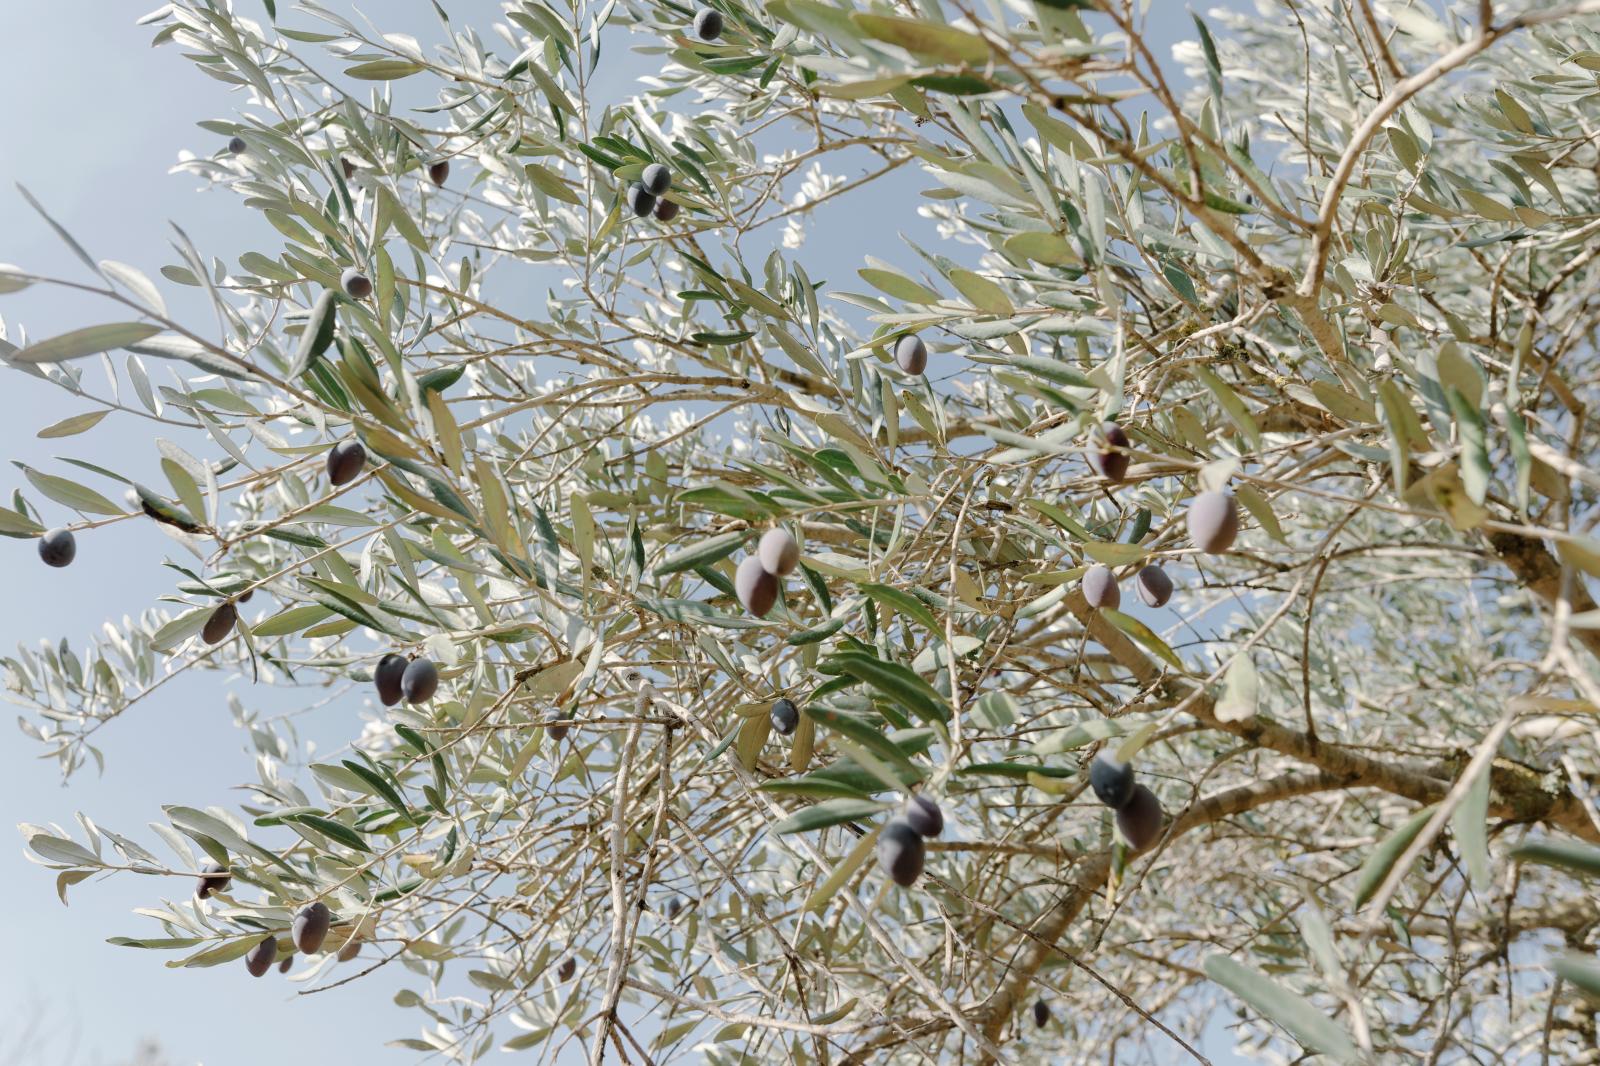 Olive Harvest In the Village of Awarta